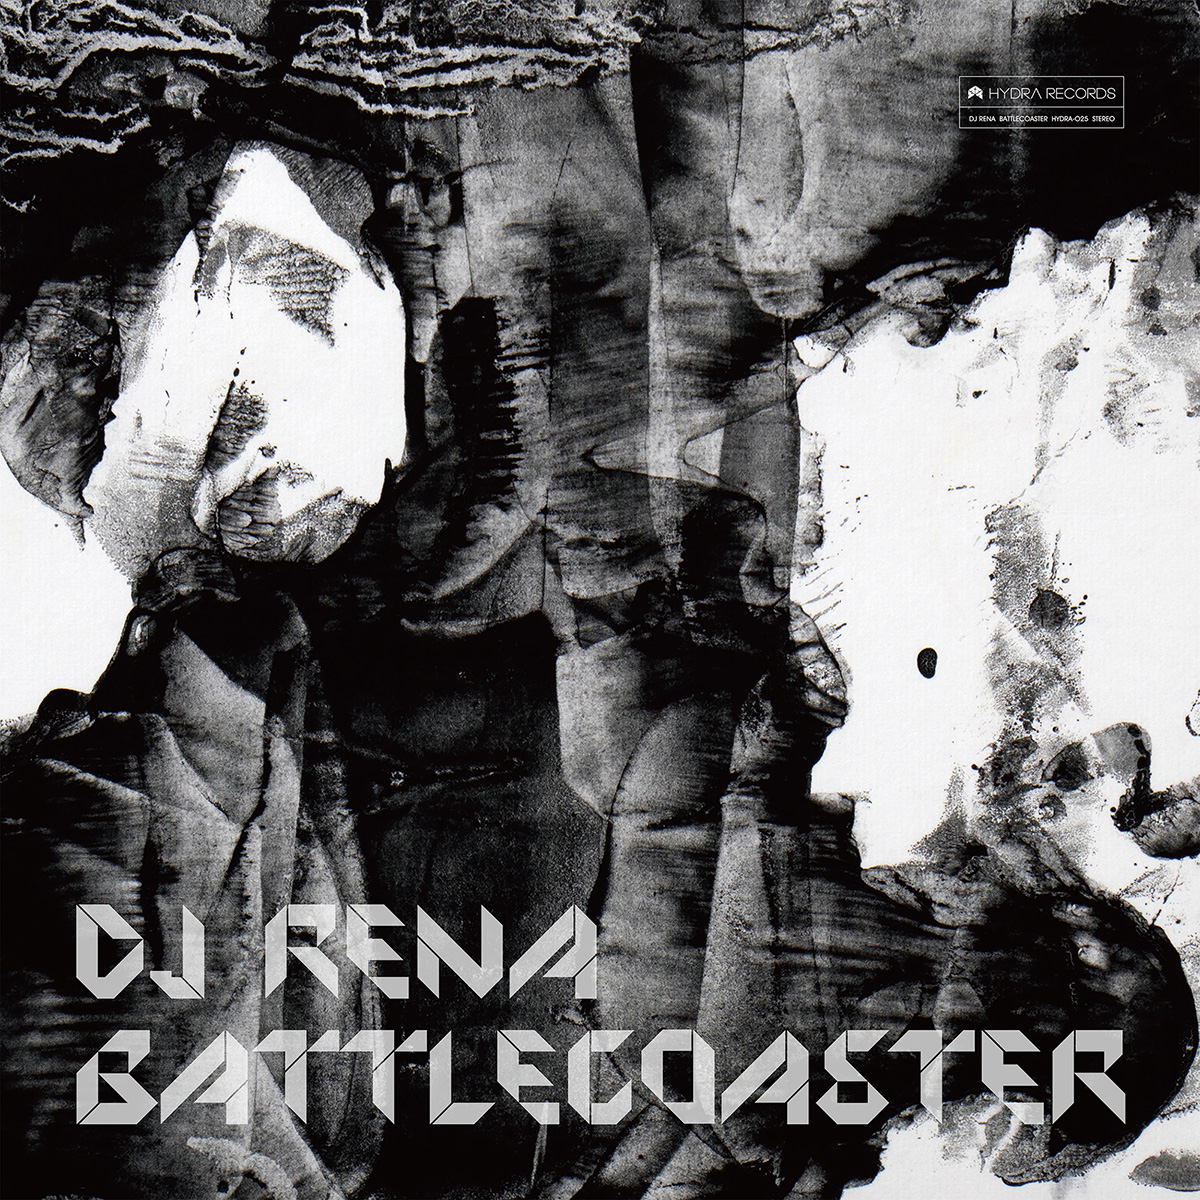 DJ Rena “Battlecoaster”